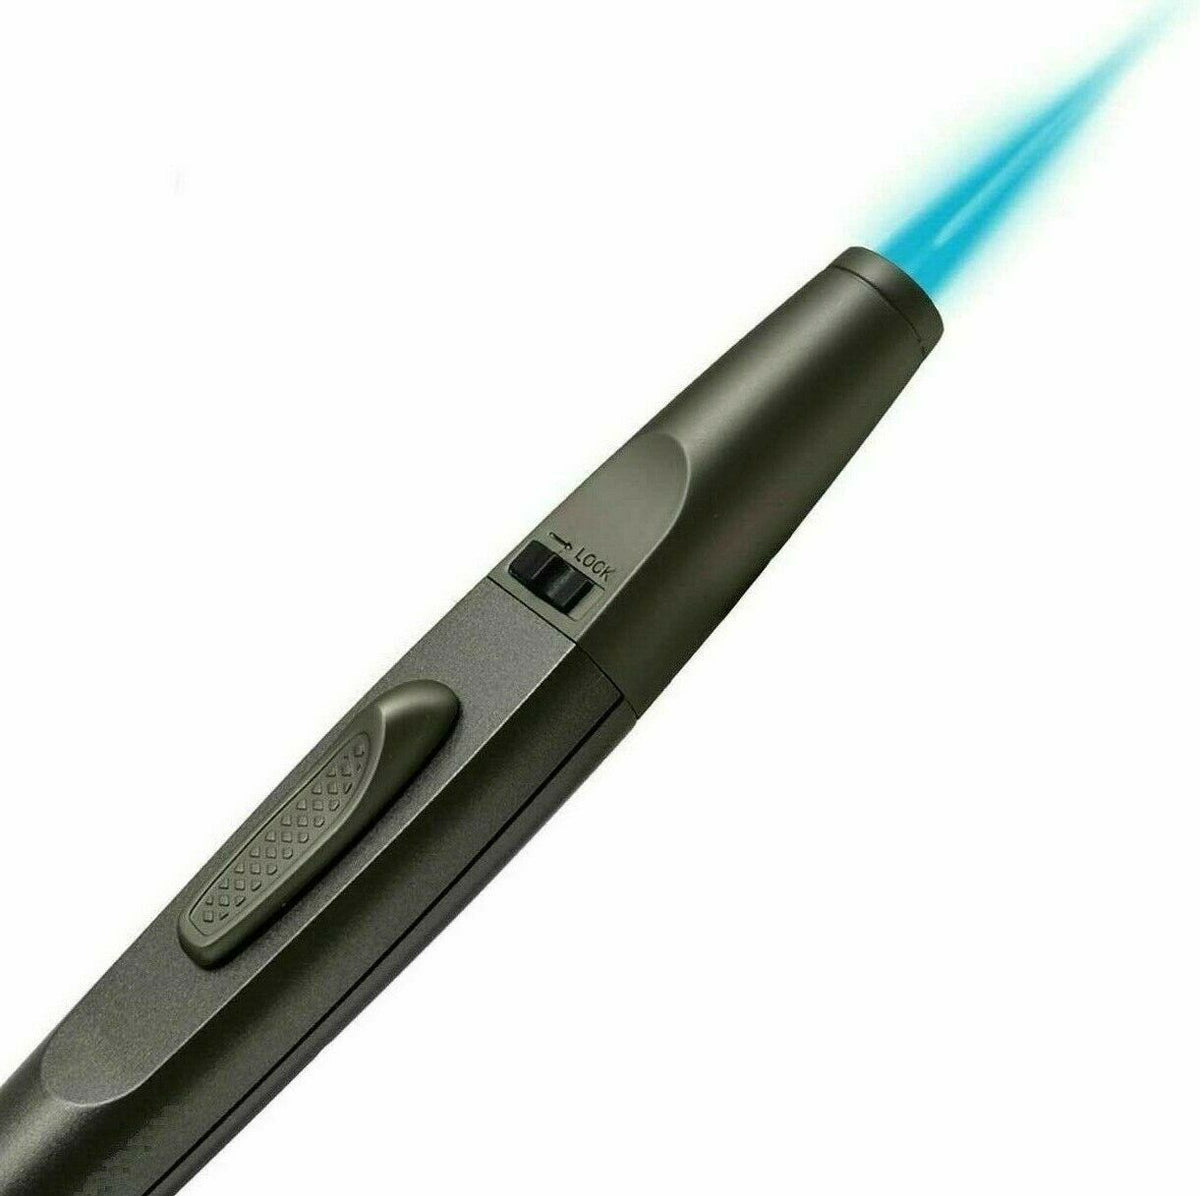 Jobon Butane Refillable multi function Single Torch Lighter Pen Pencil with Safety Locks